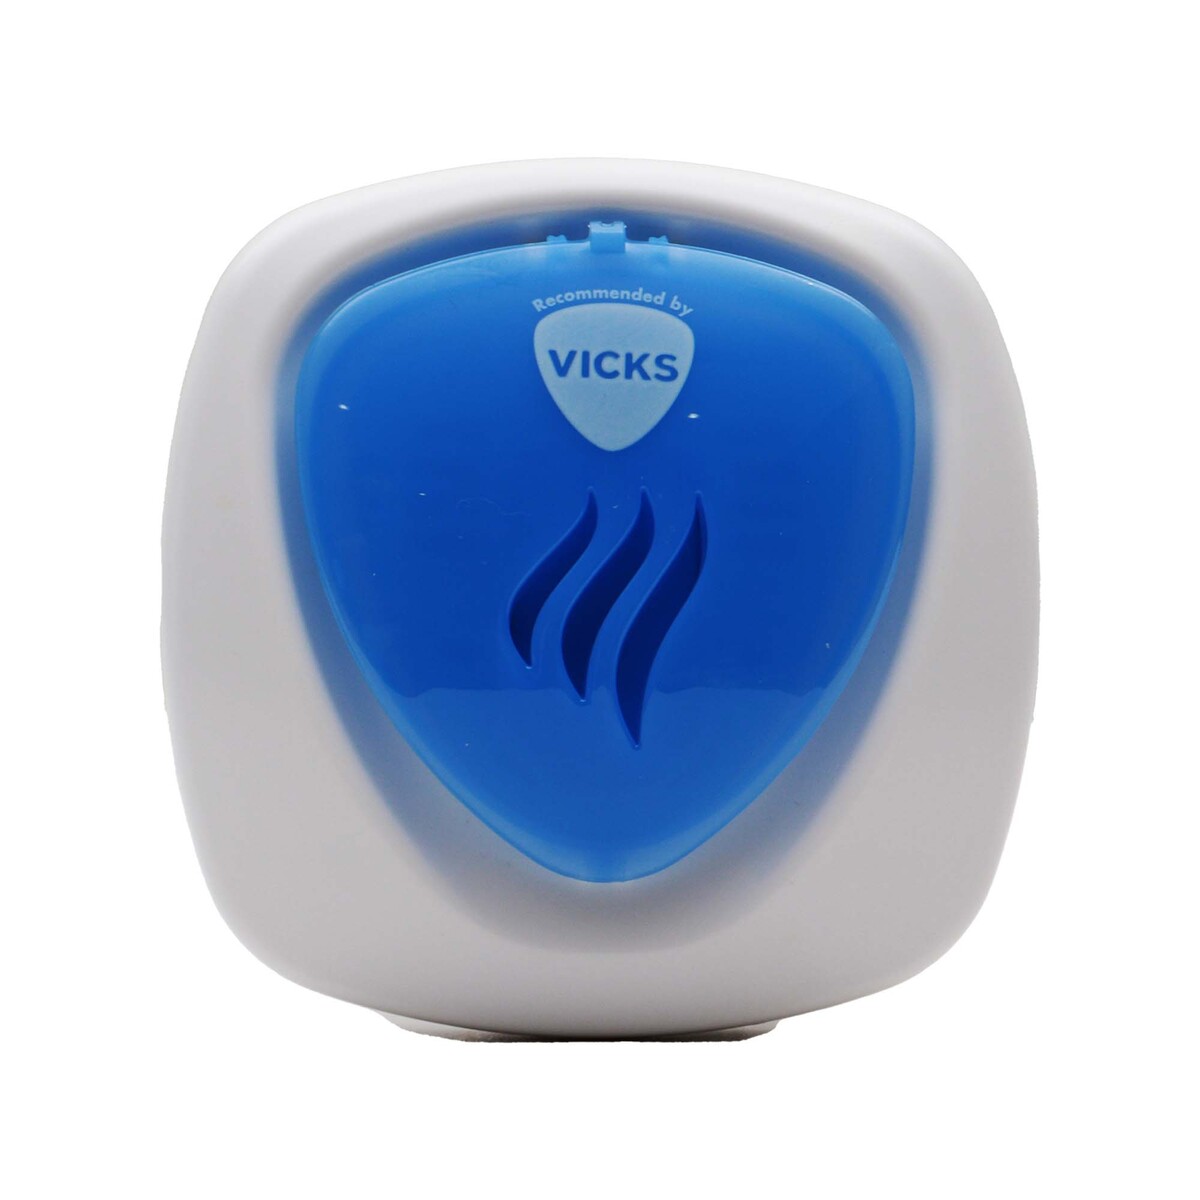 Vicks Waterless Diffuser VH-1800EU